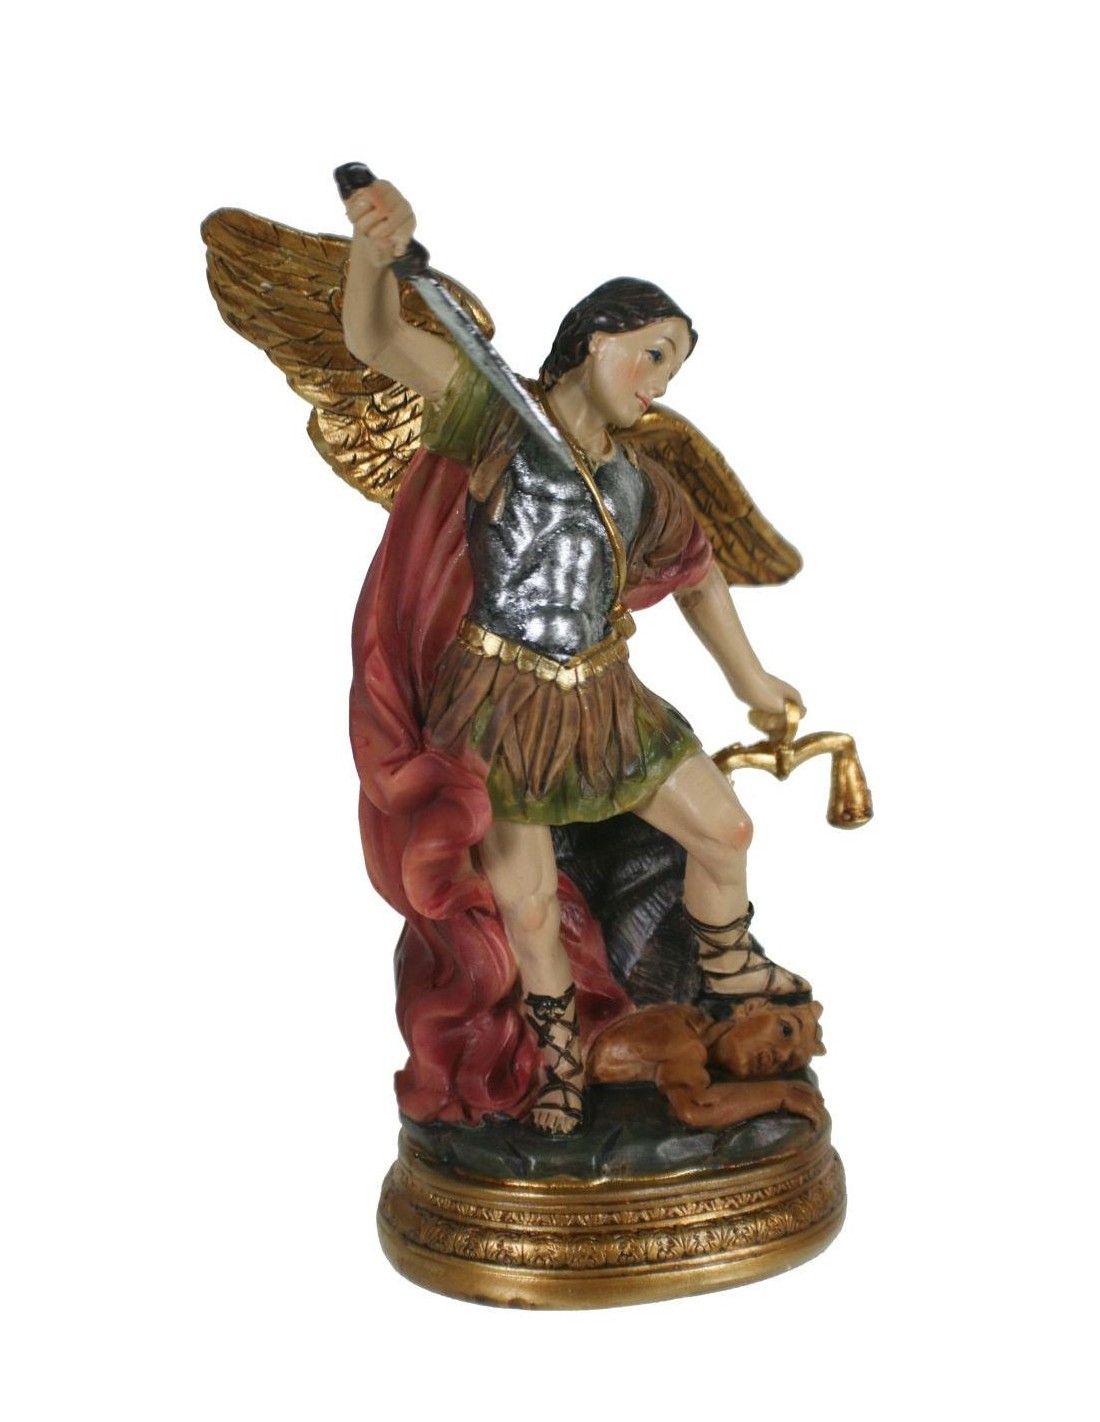 Figura estatua religiosa de culto San Miguel pintada a mano decoración hogar